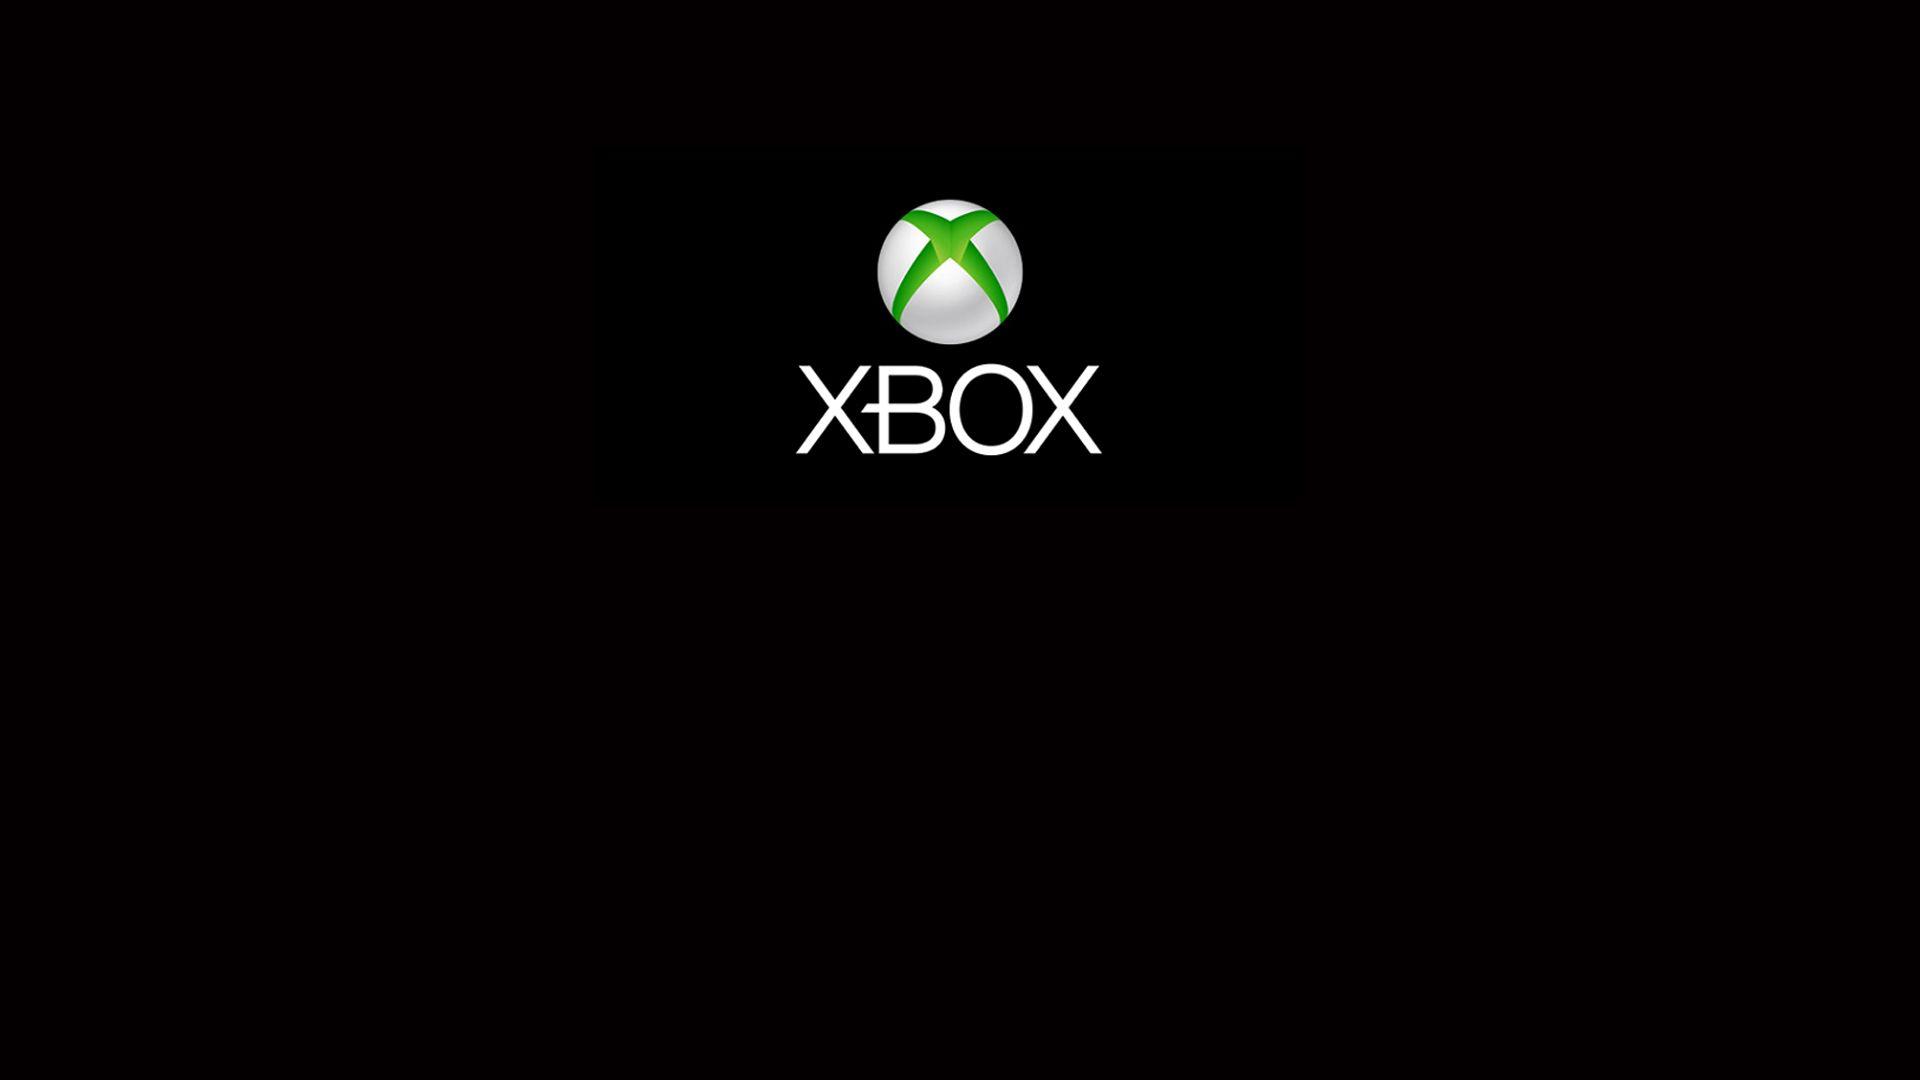 Xbox One Wallpaper, Xbox One Full 100% Quality HD Quality